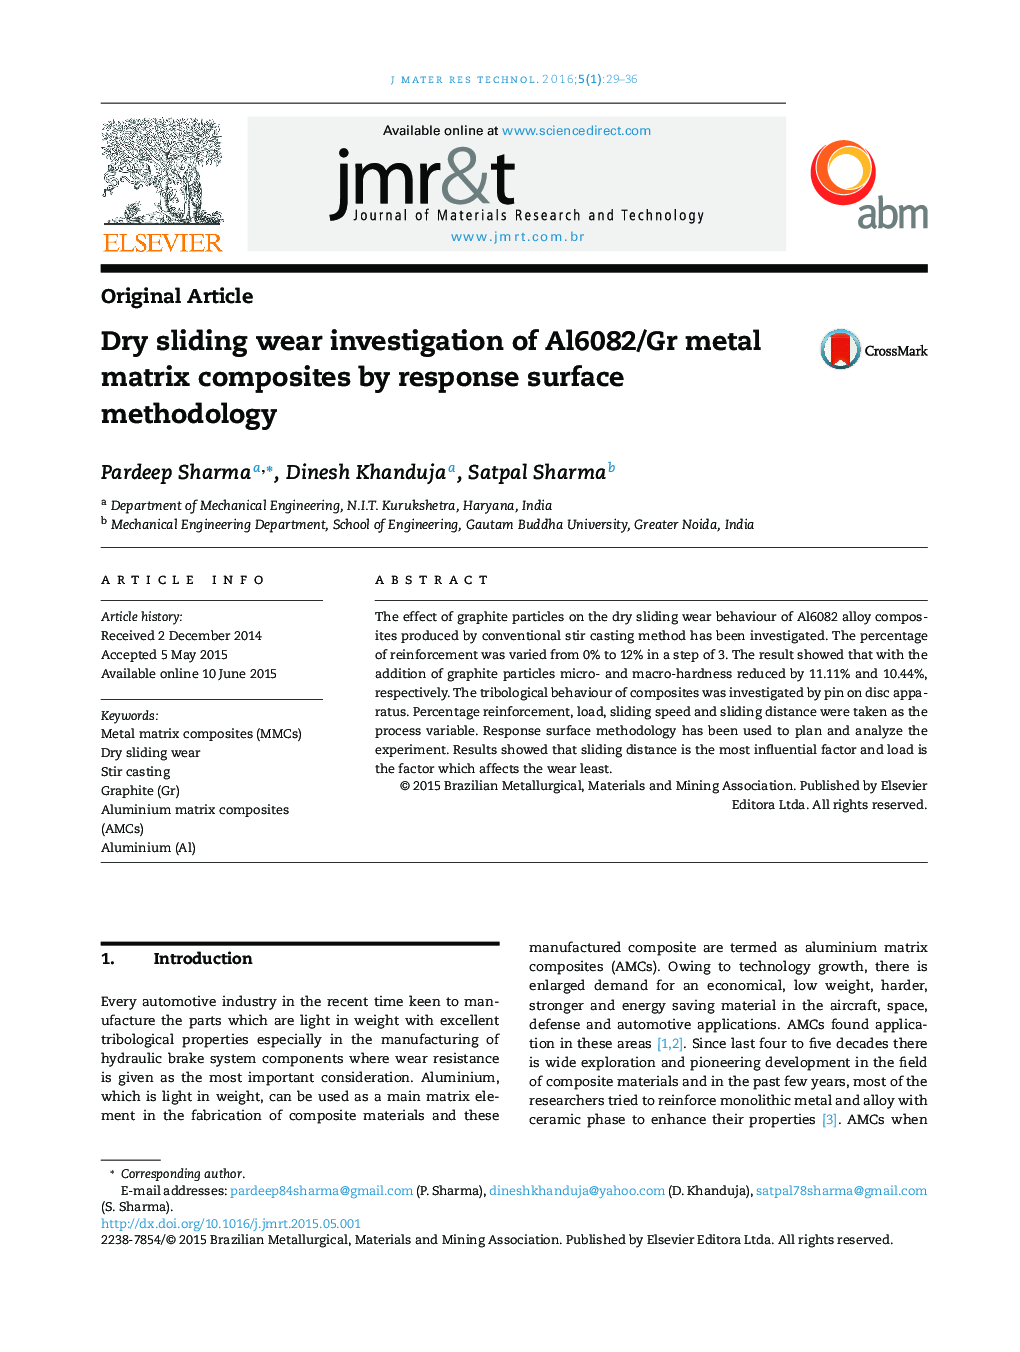 Dry sliding wear investigation of Al6082/Gr metal matrix composites by response surface methodology